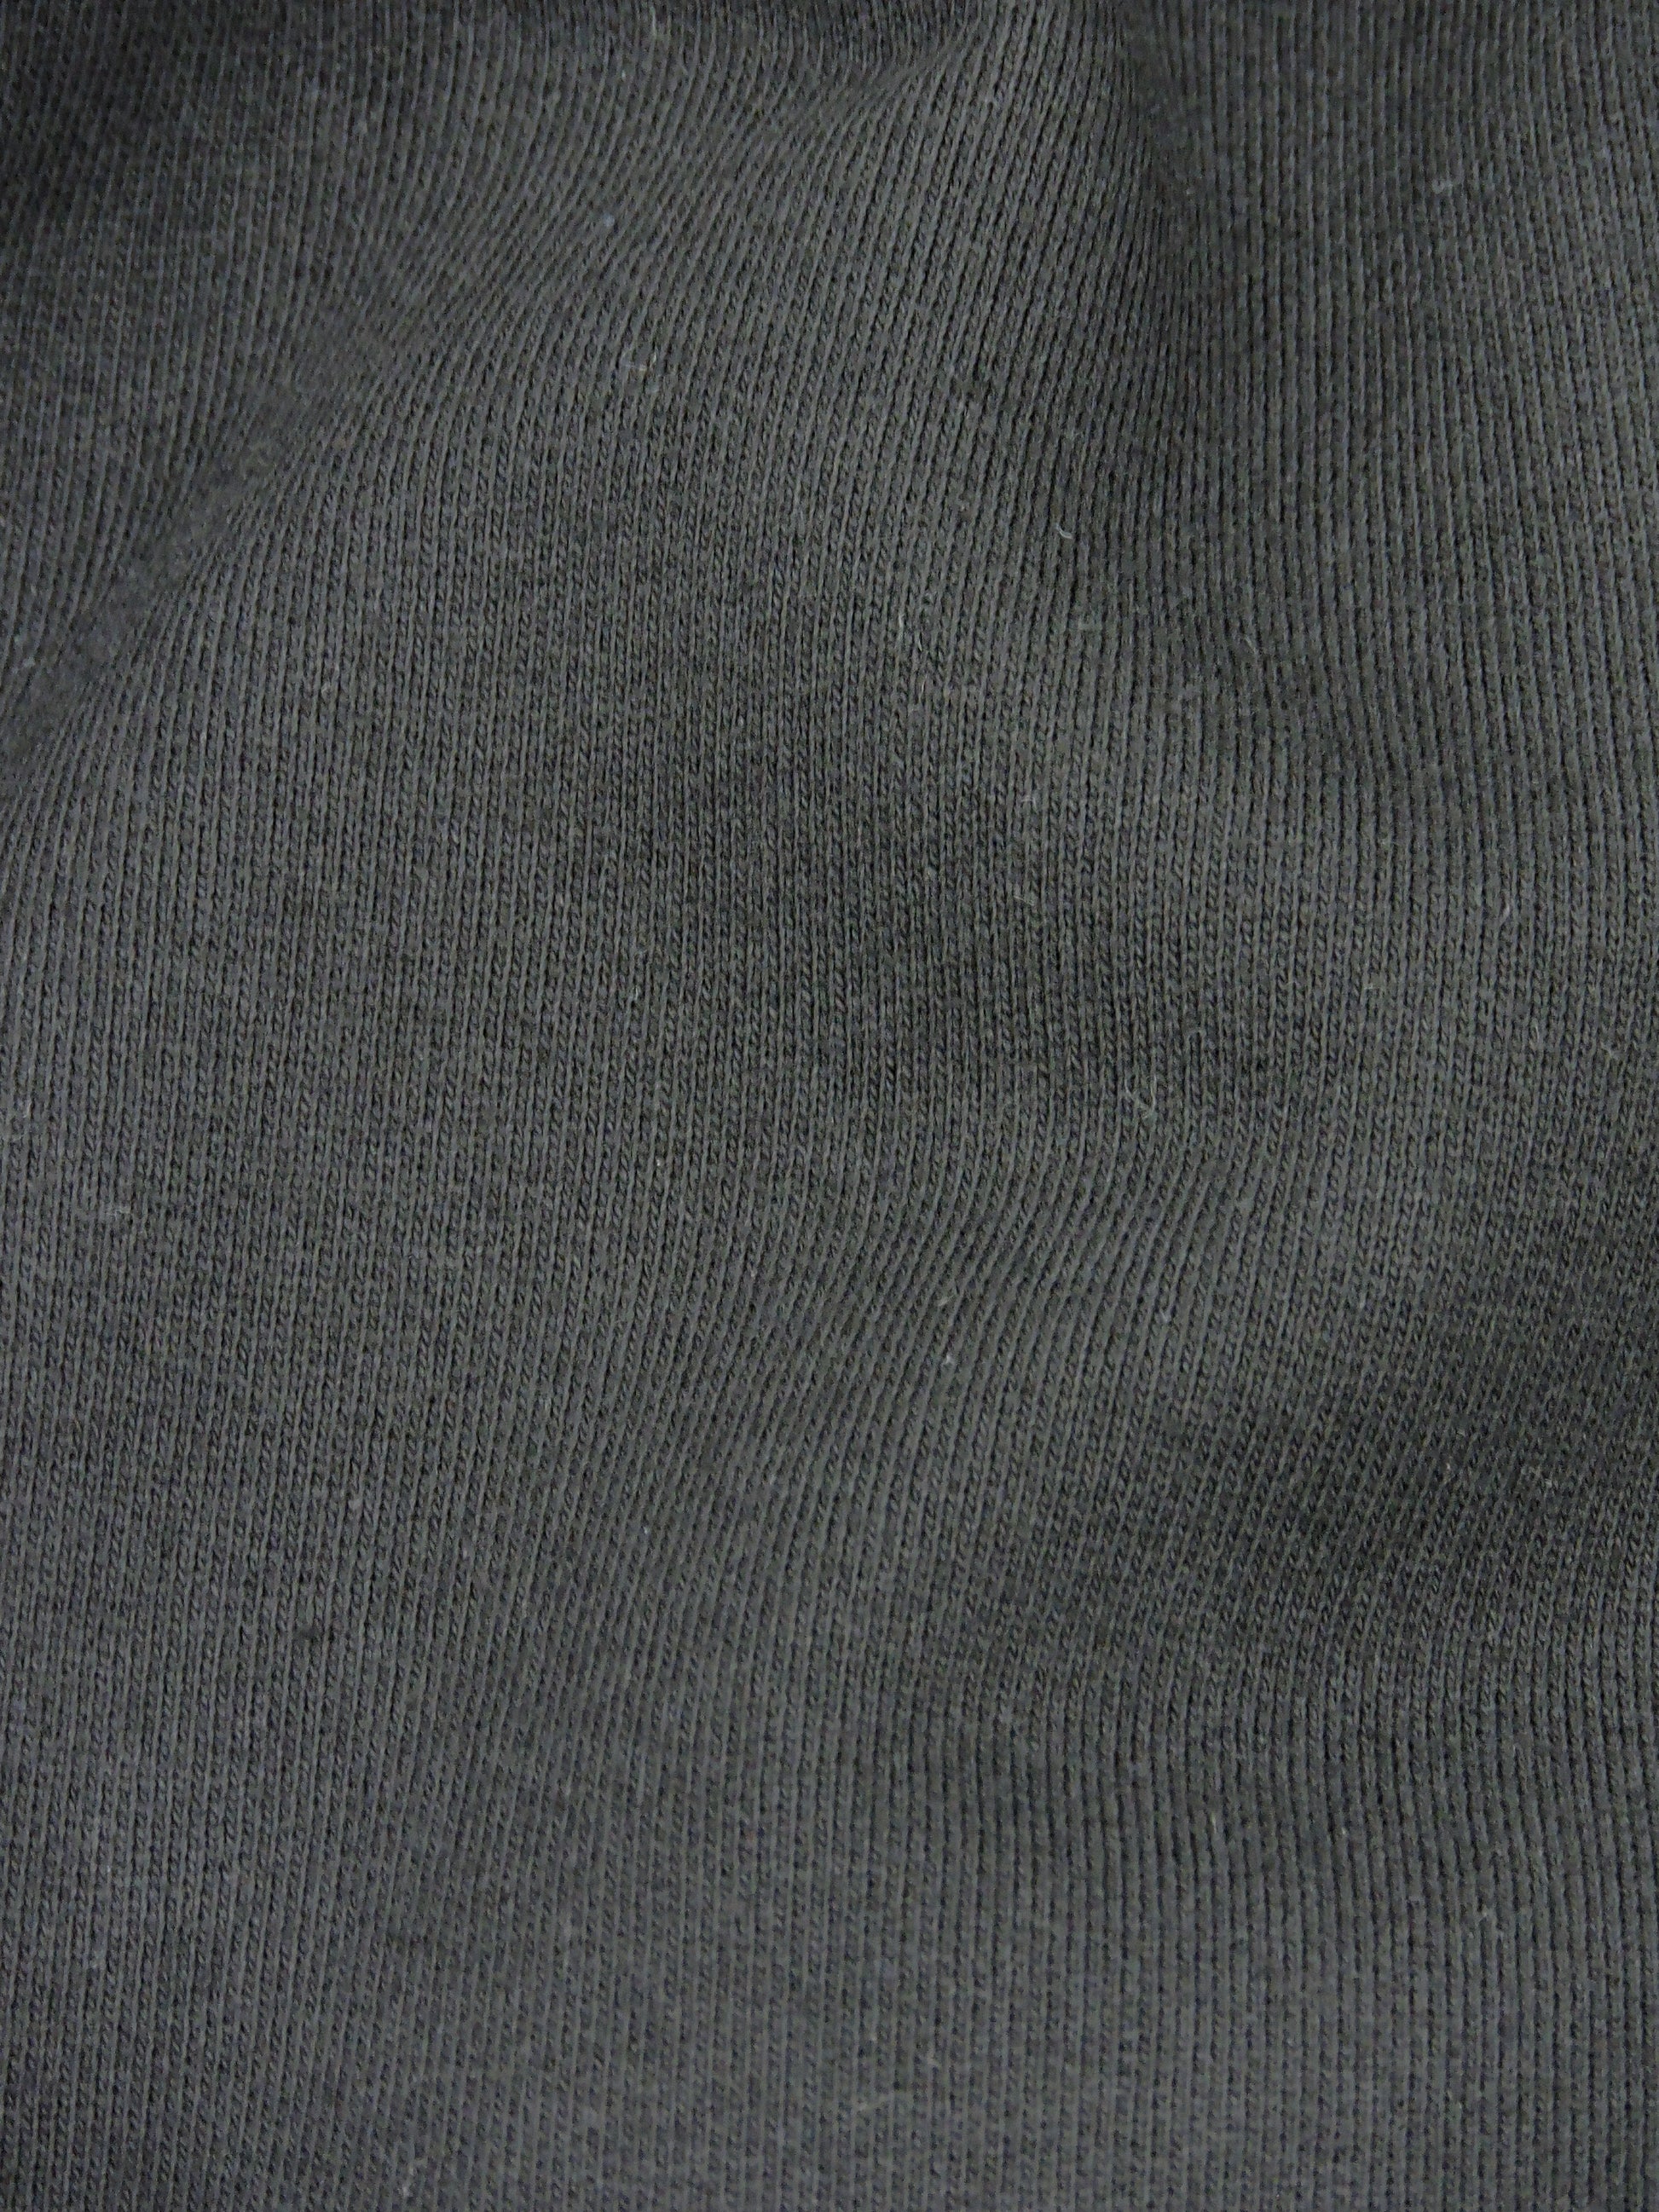 Close up of soft cotton fabric